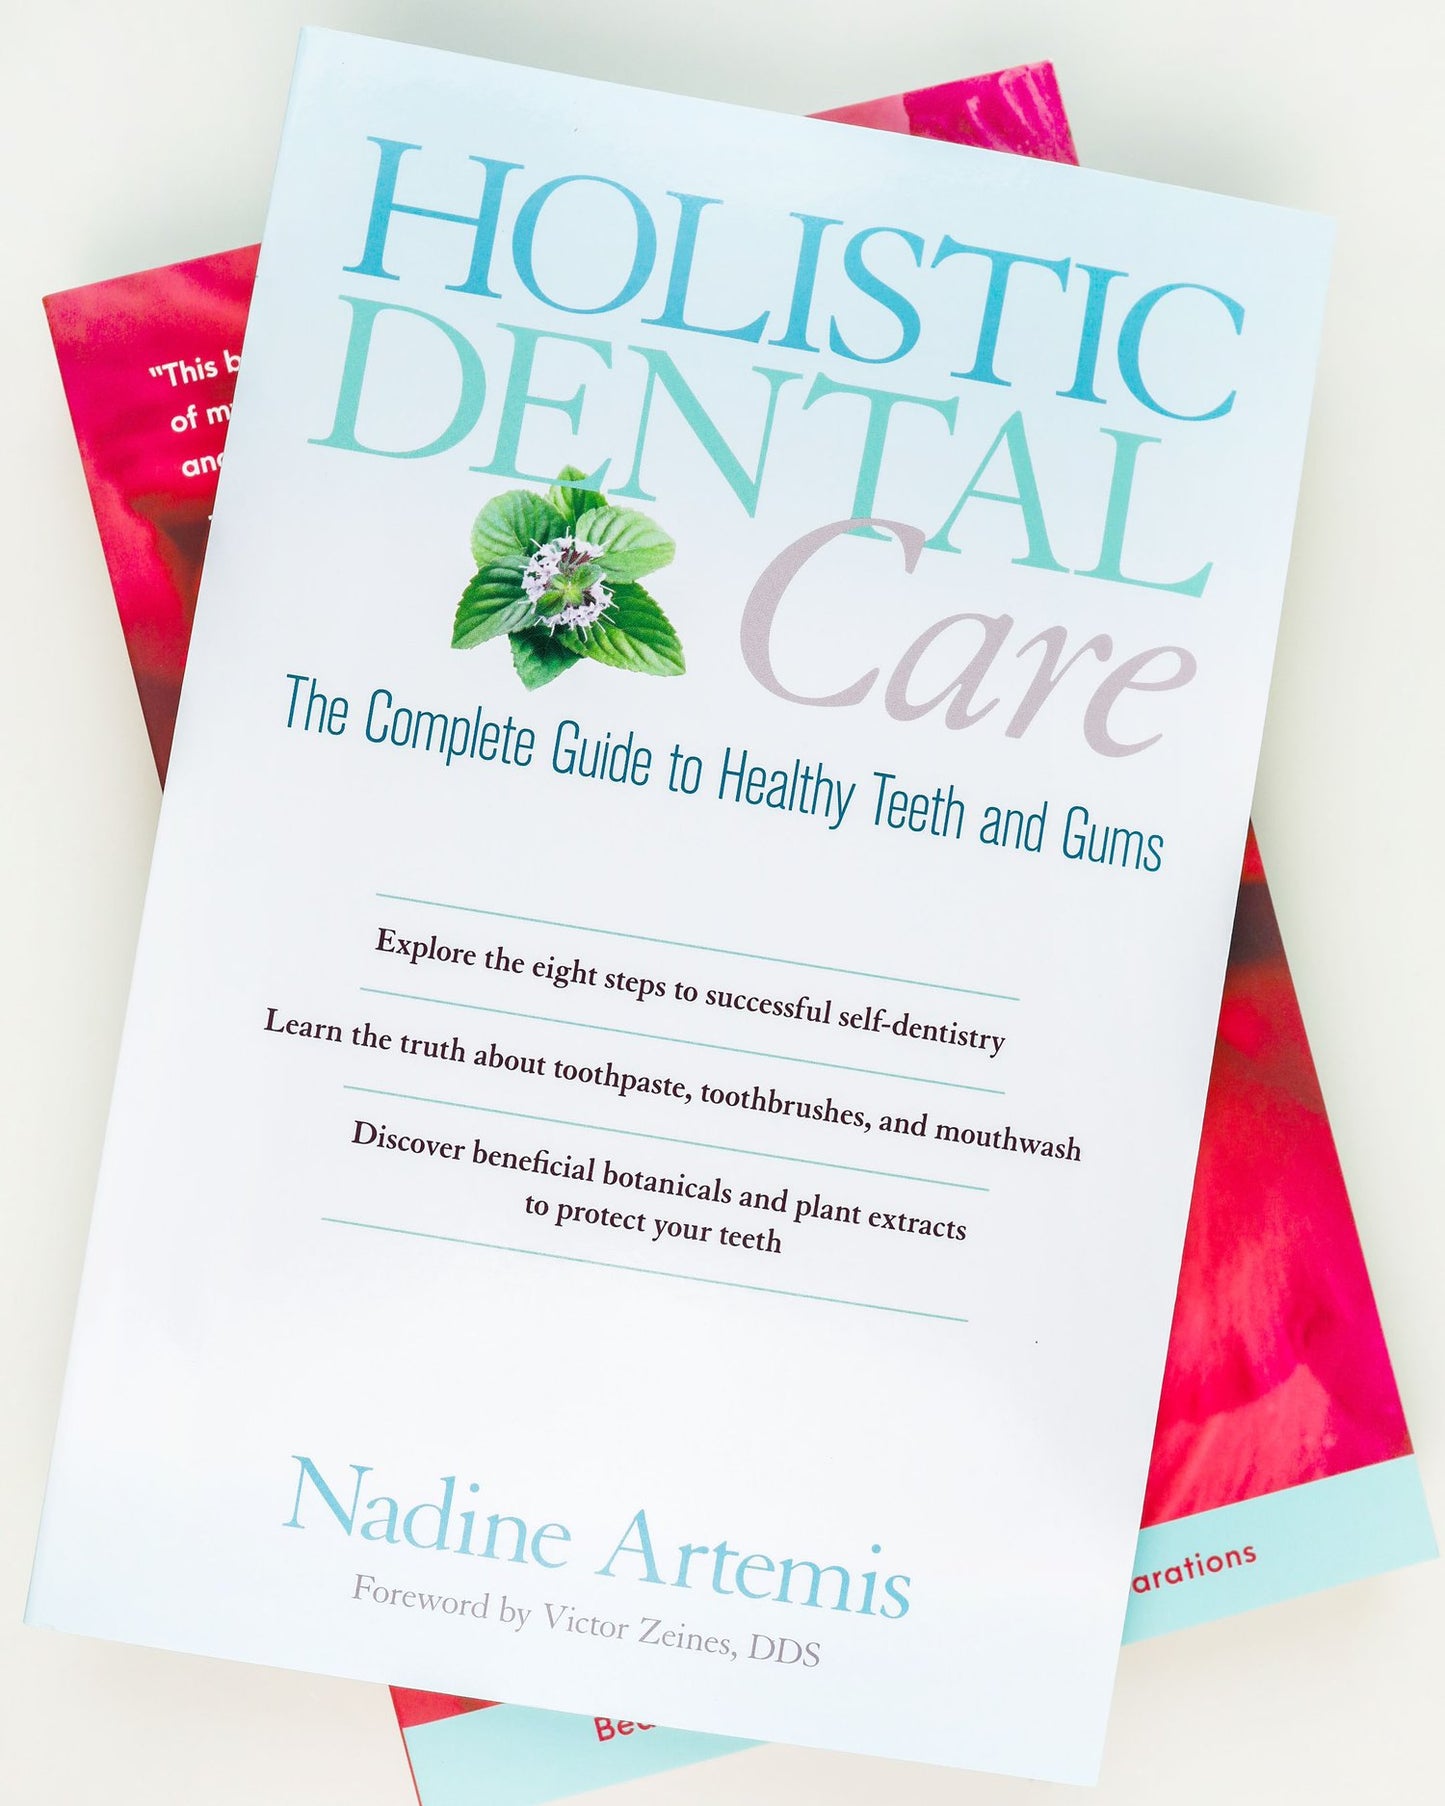 Holistic Dental Care by Nadine Artemis